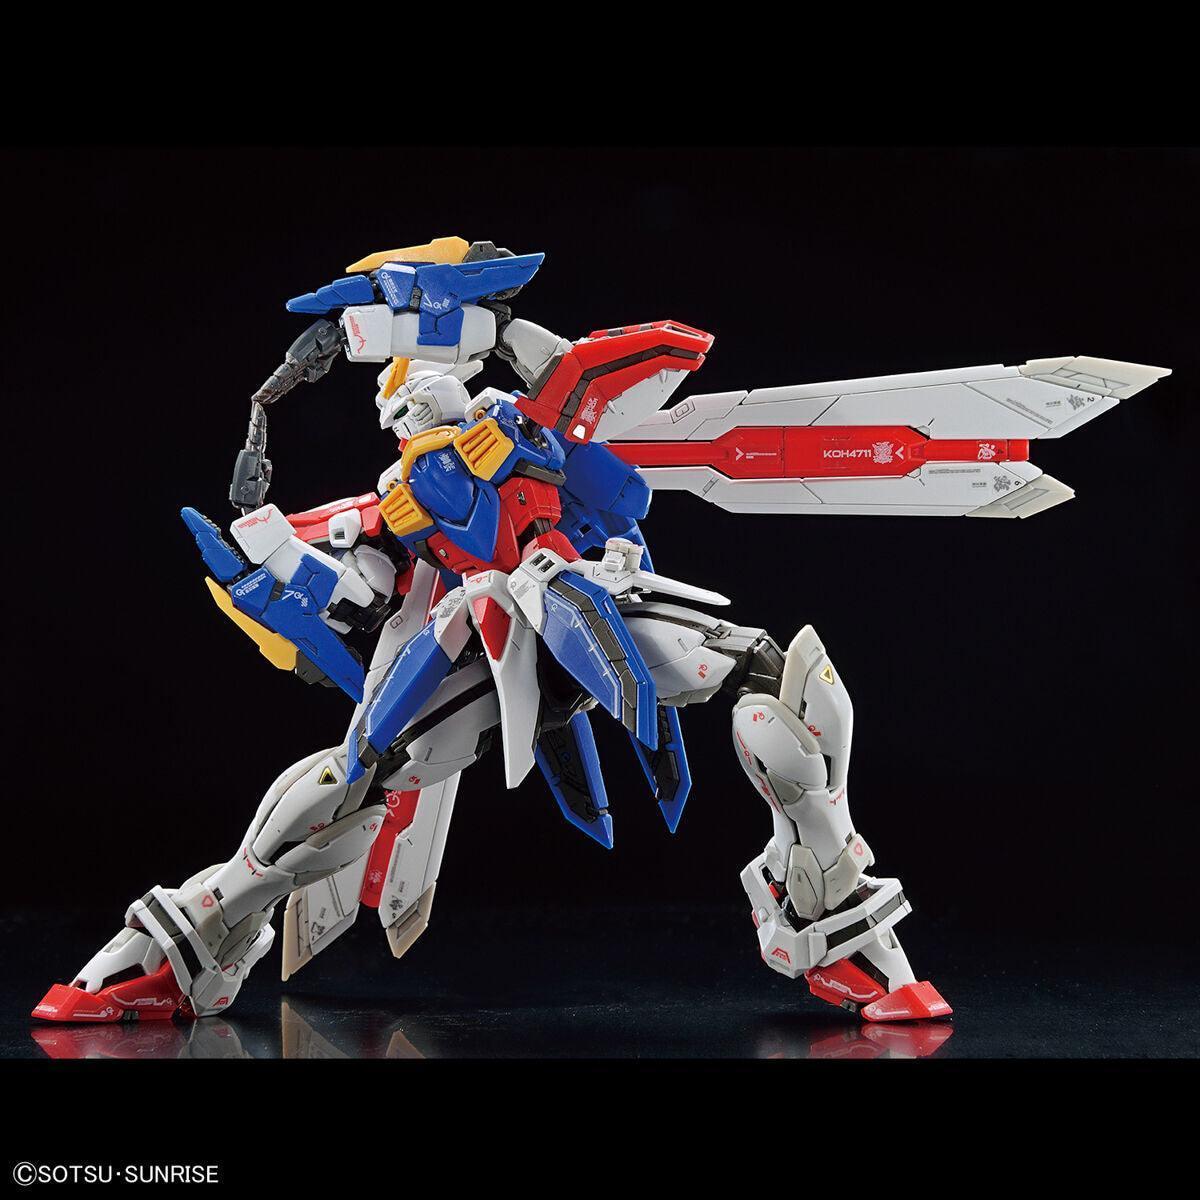 Bandai RG 1/144 No.037 God Gundam - Kidultverse